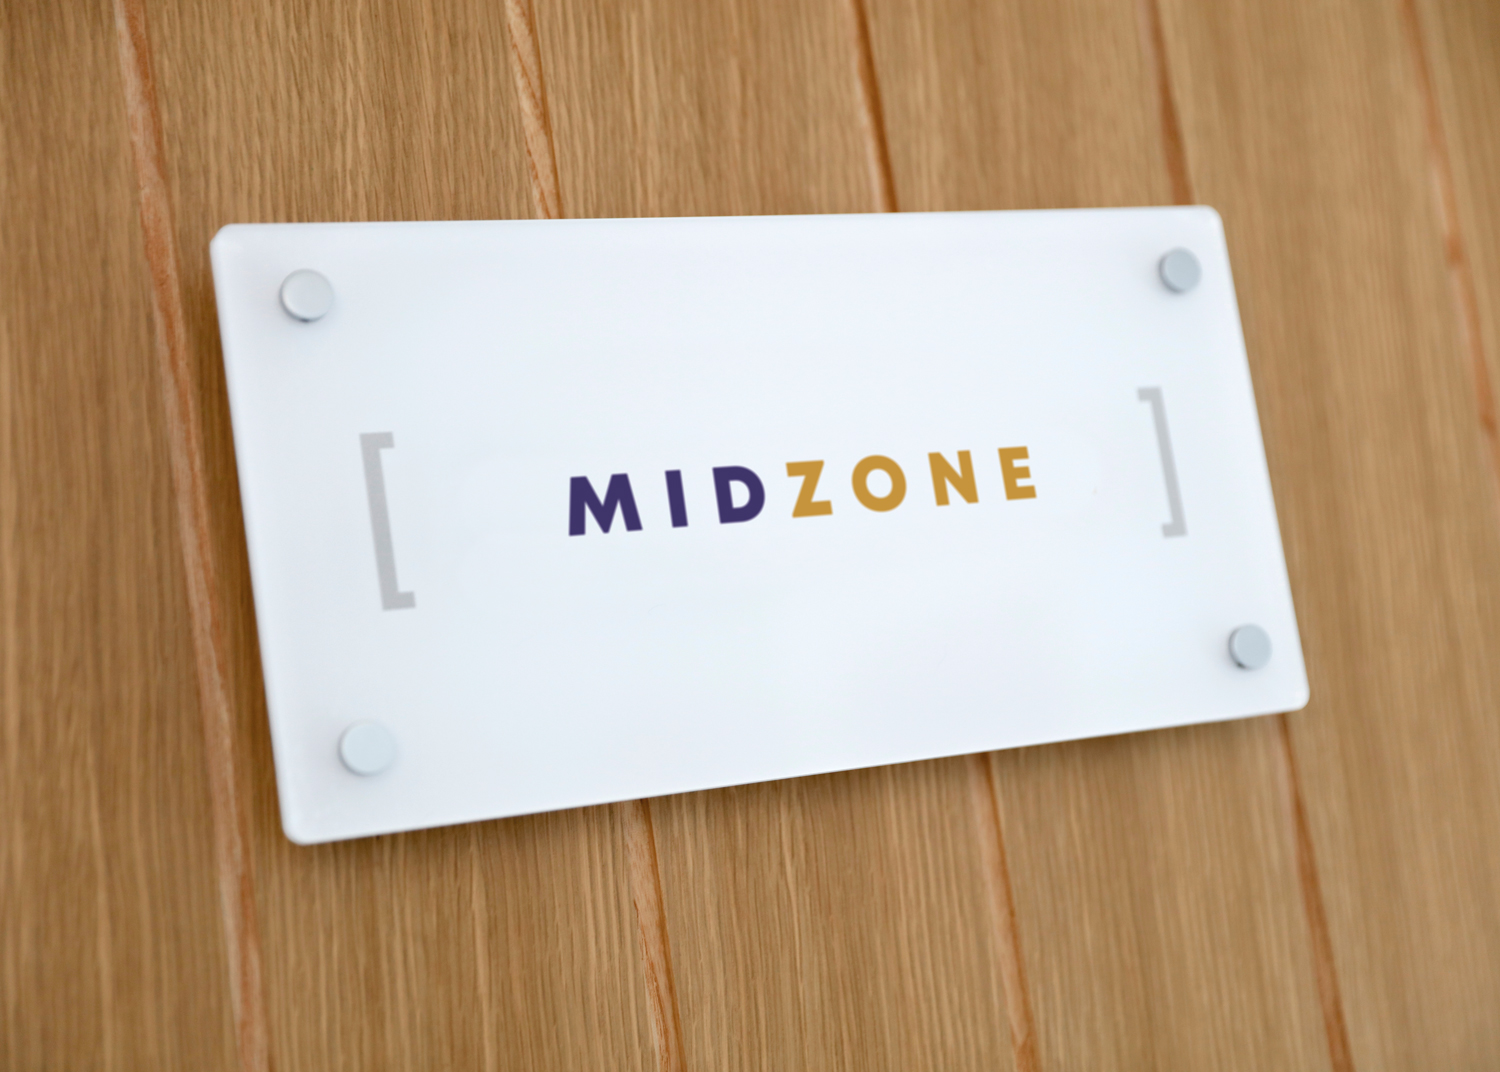 Midzone sign